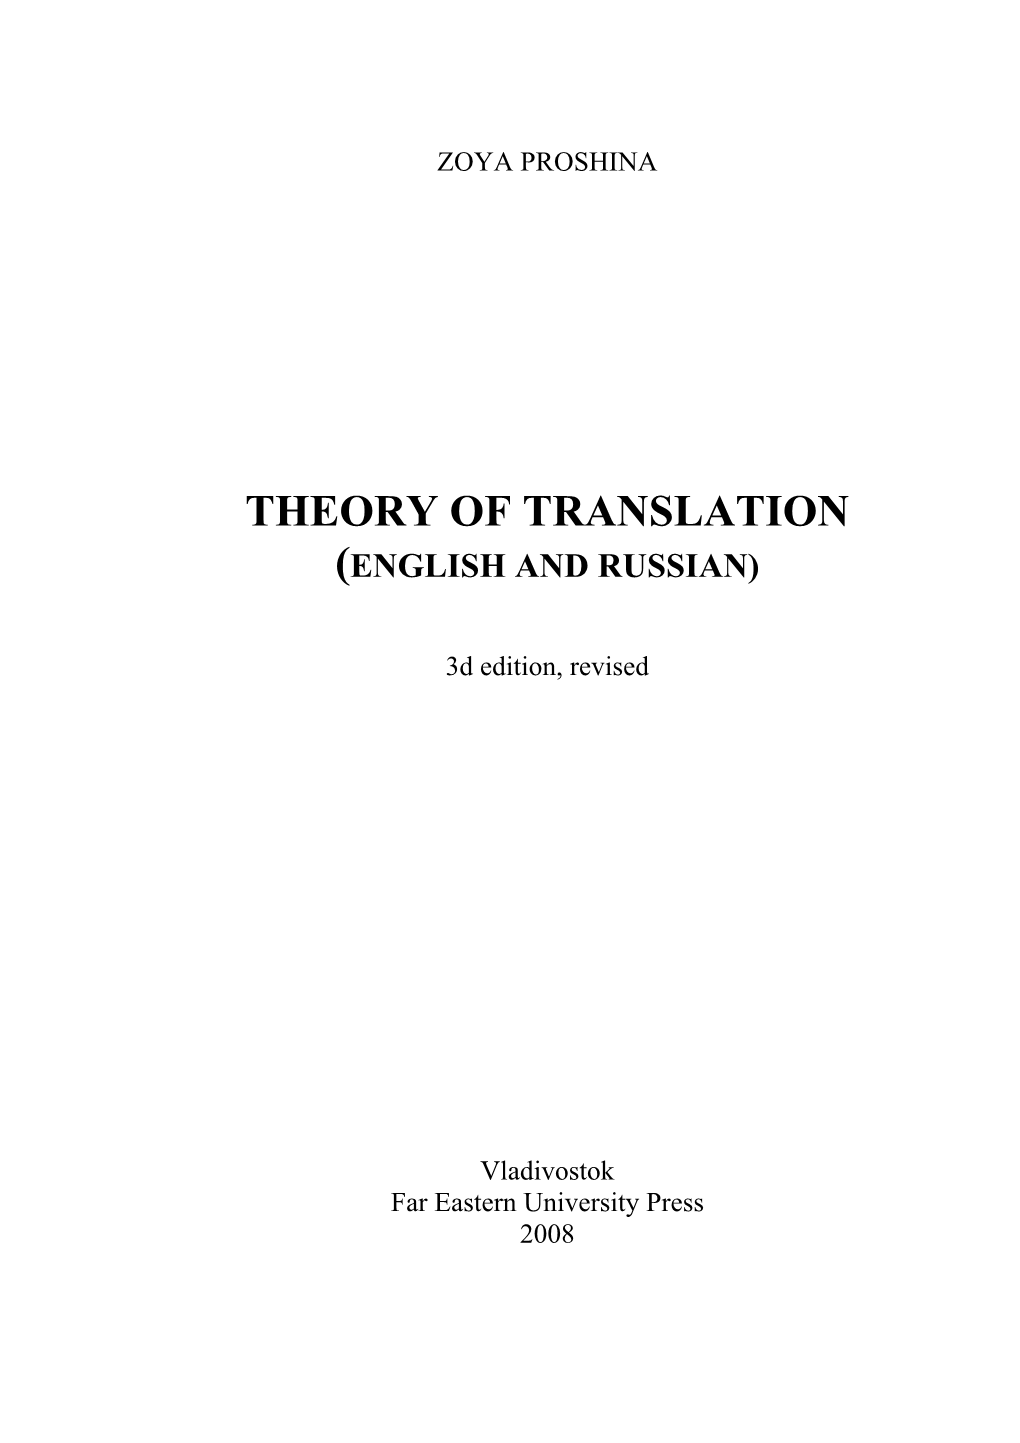 Theory of Translation (English and Russian)